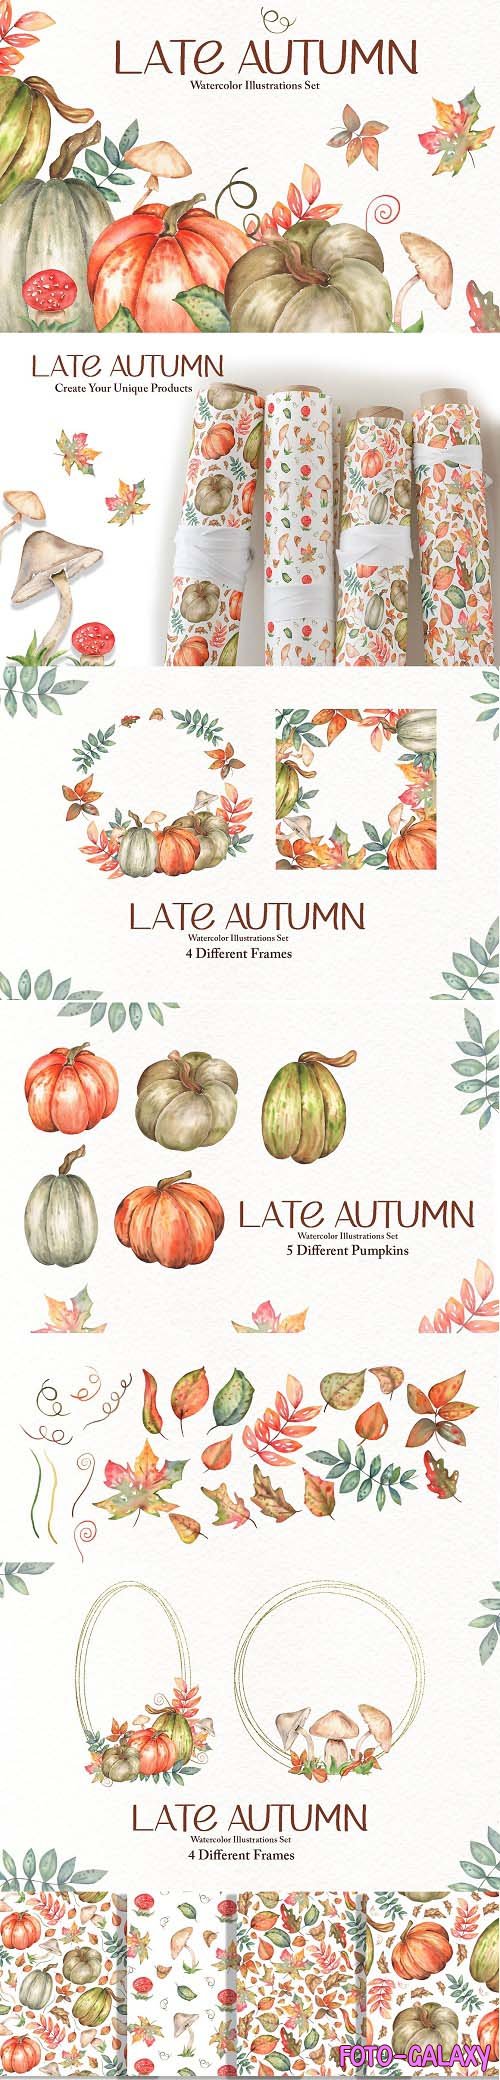 Late Autumn Watercolor Set - 6575931